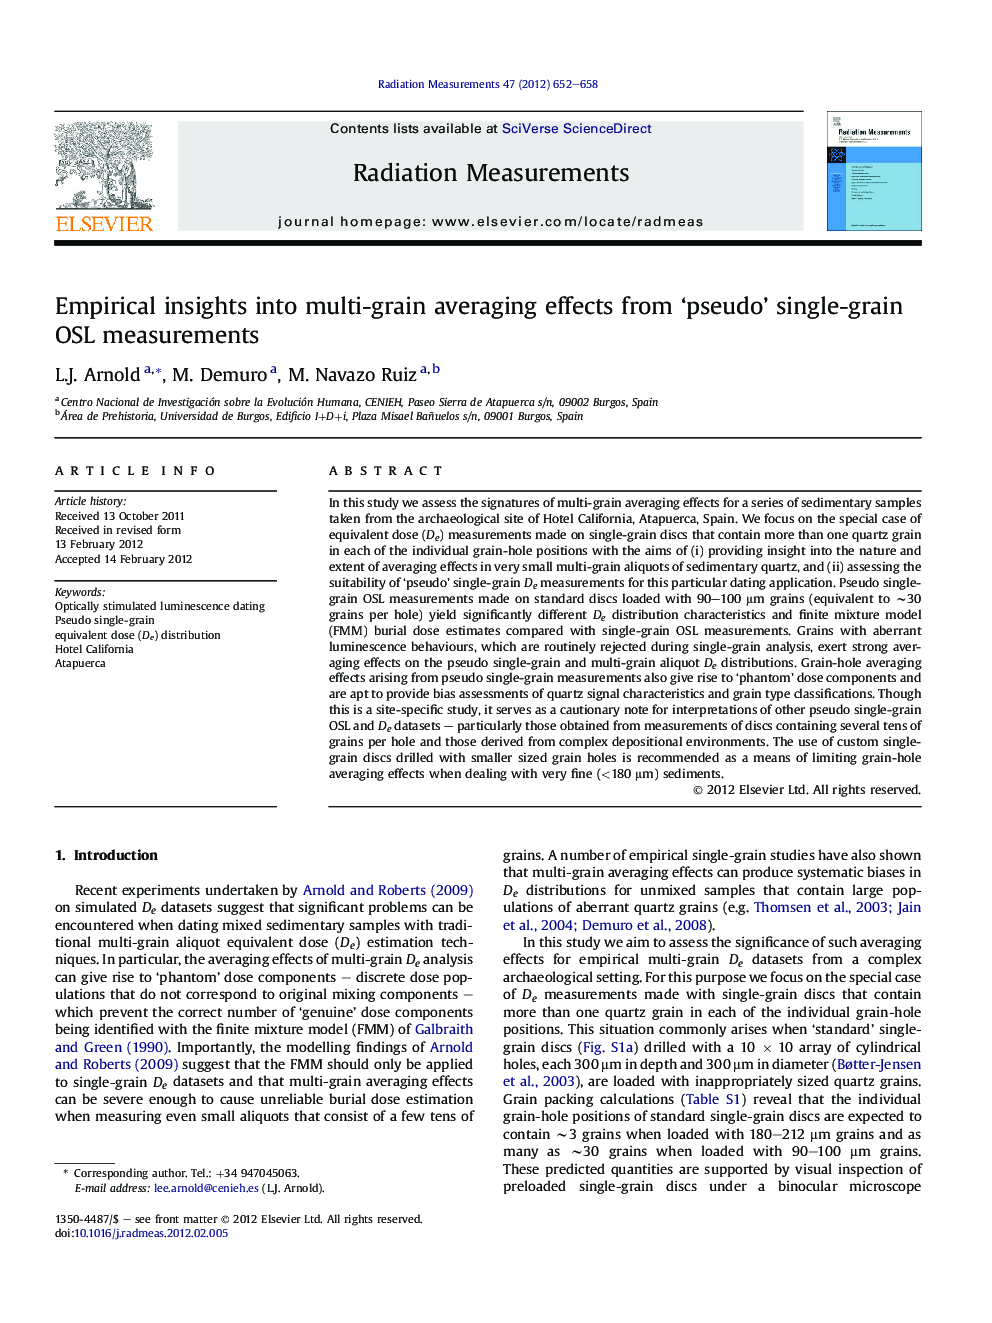 Empirical insights into multi-grain averaging effects from ‘pseudo’ single-grain OSL measurements